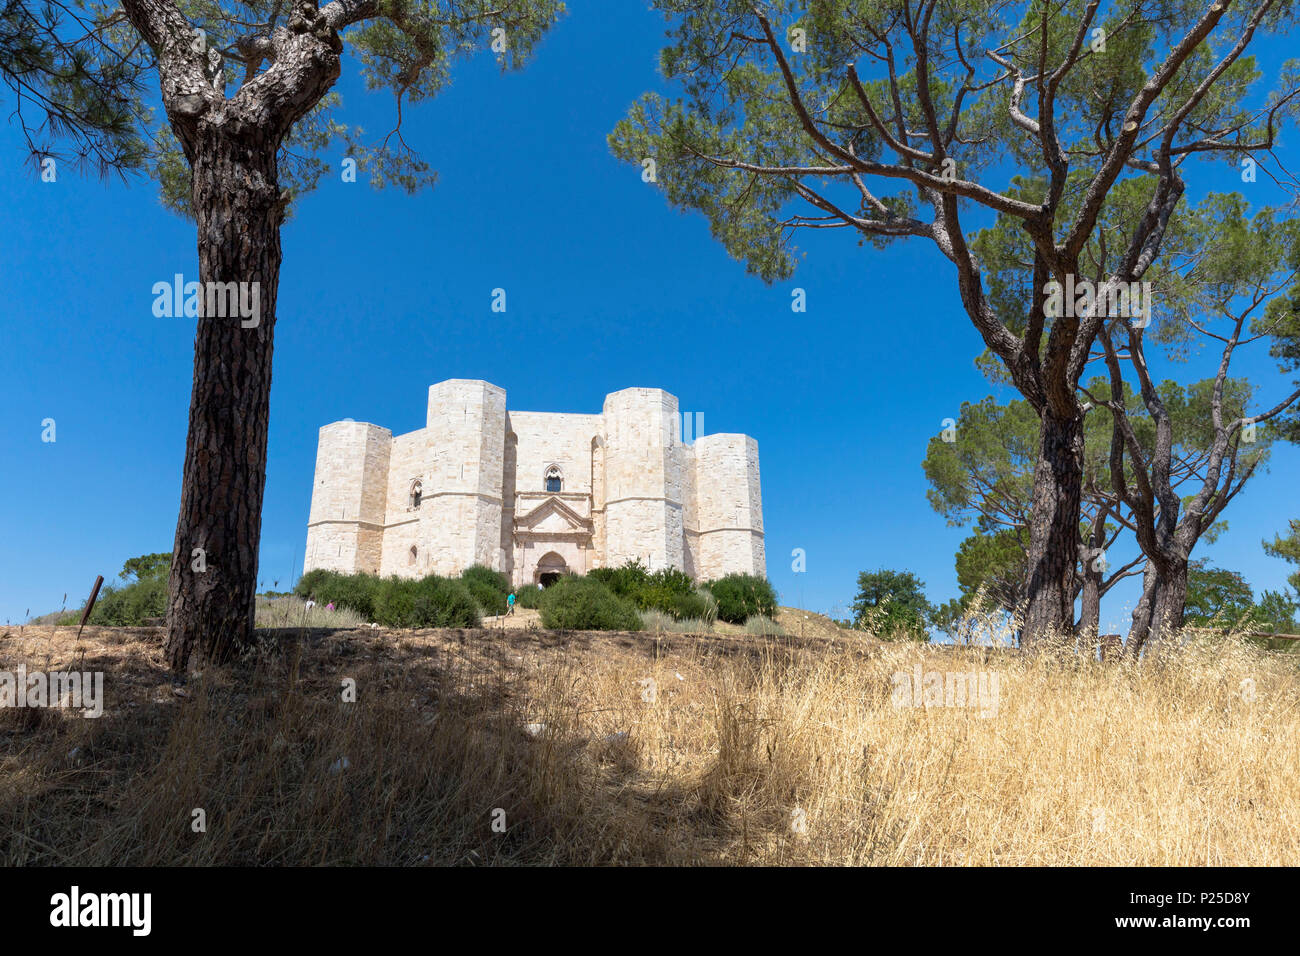 Castel del Monte, Barletta, Andria Trani, Italie, Pouilles, district Banque D'Images